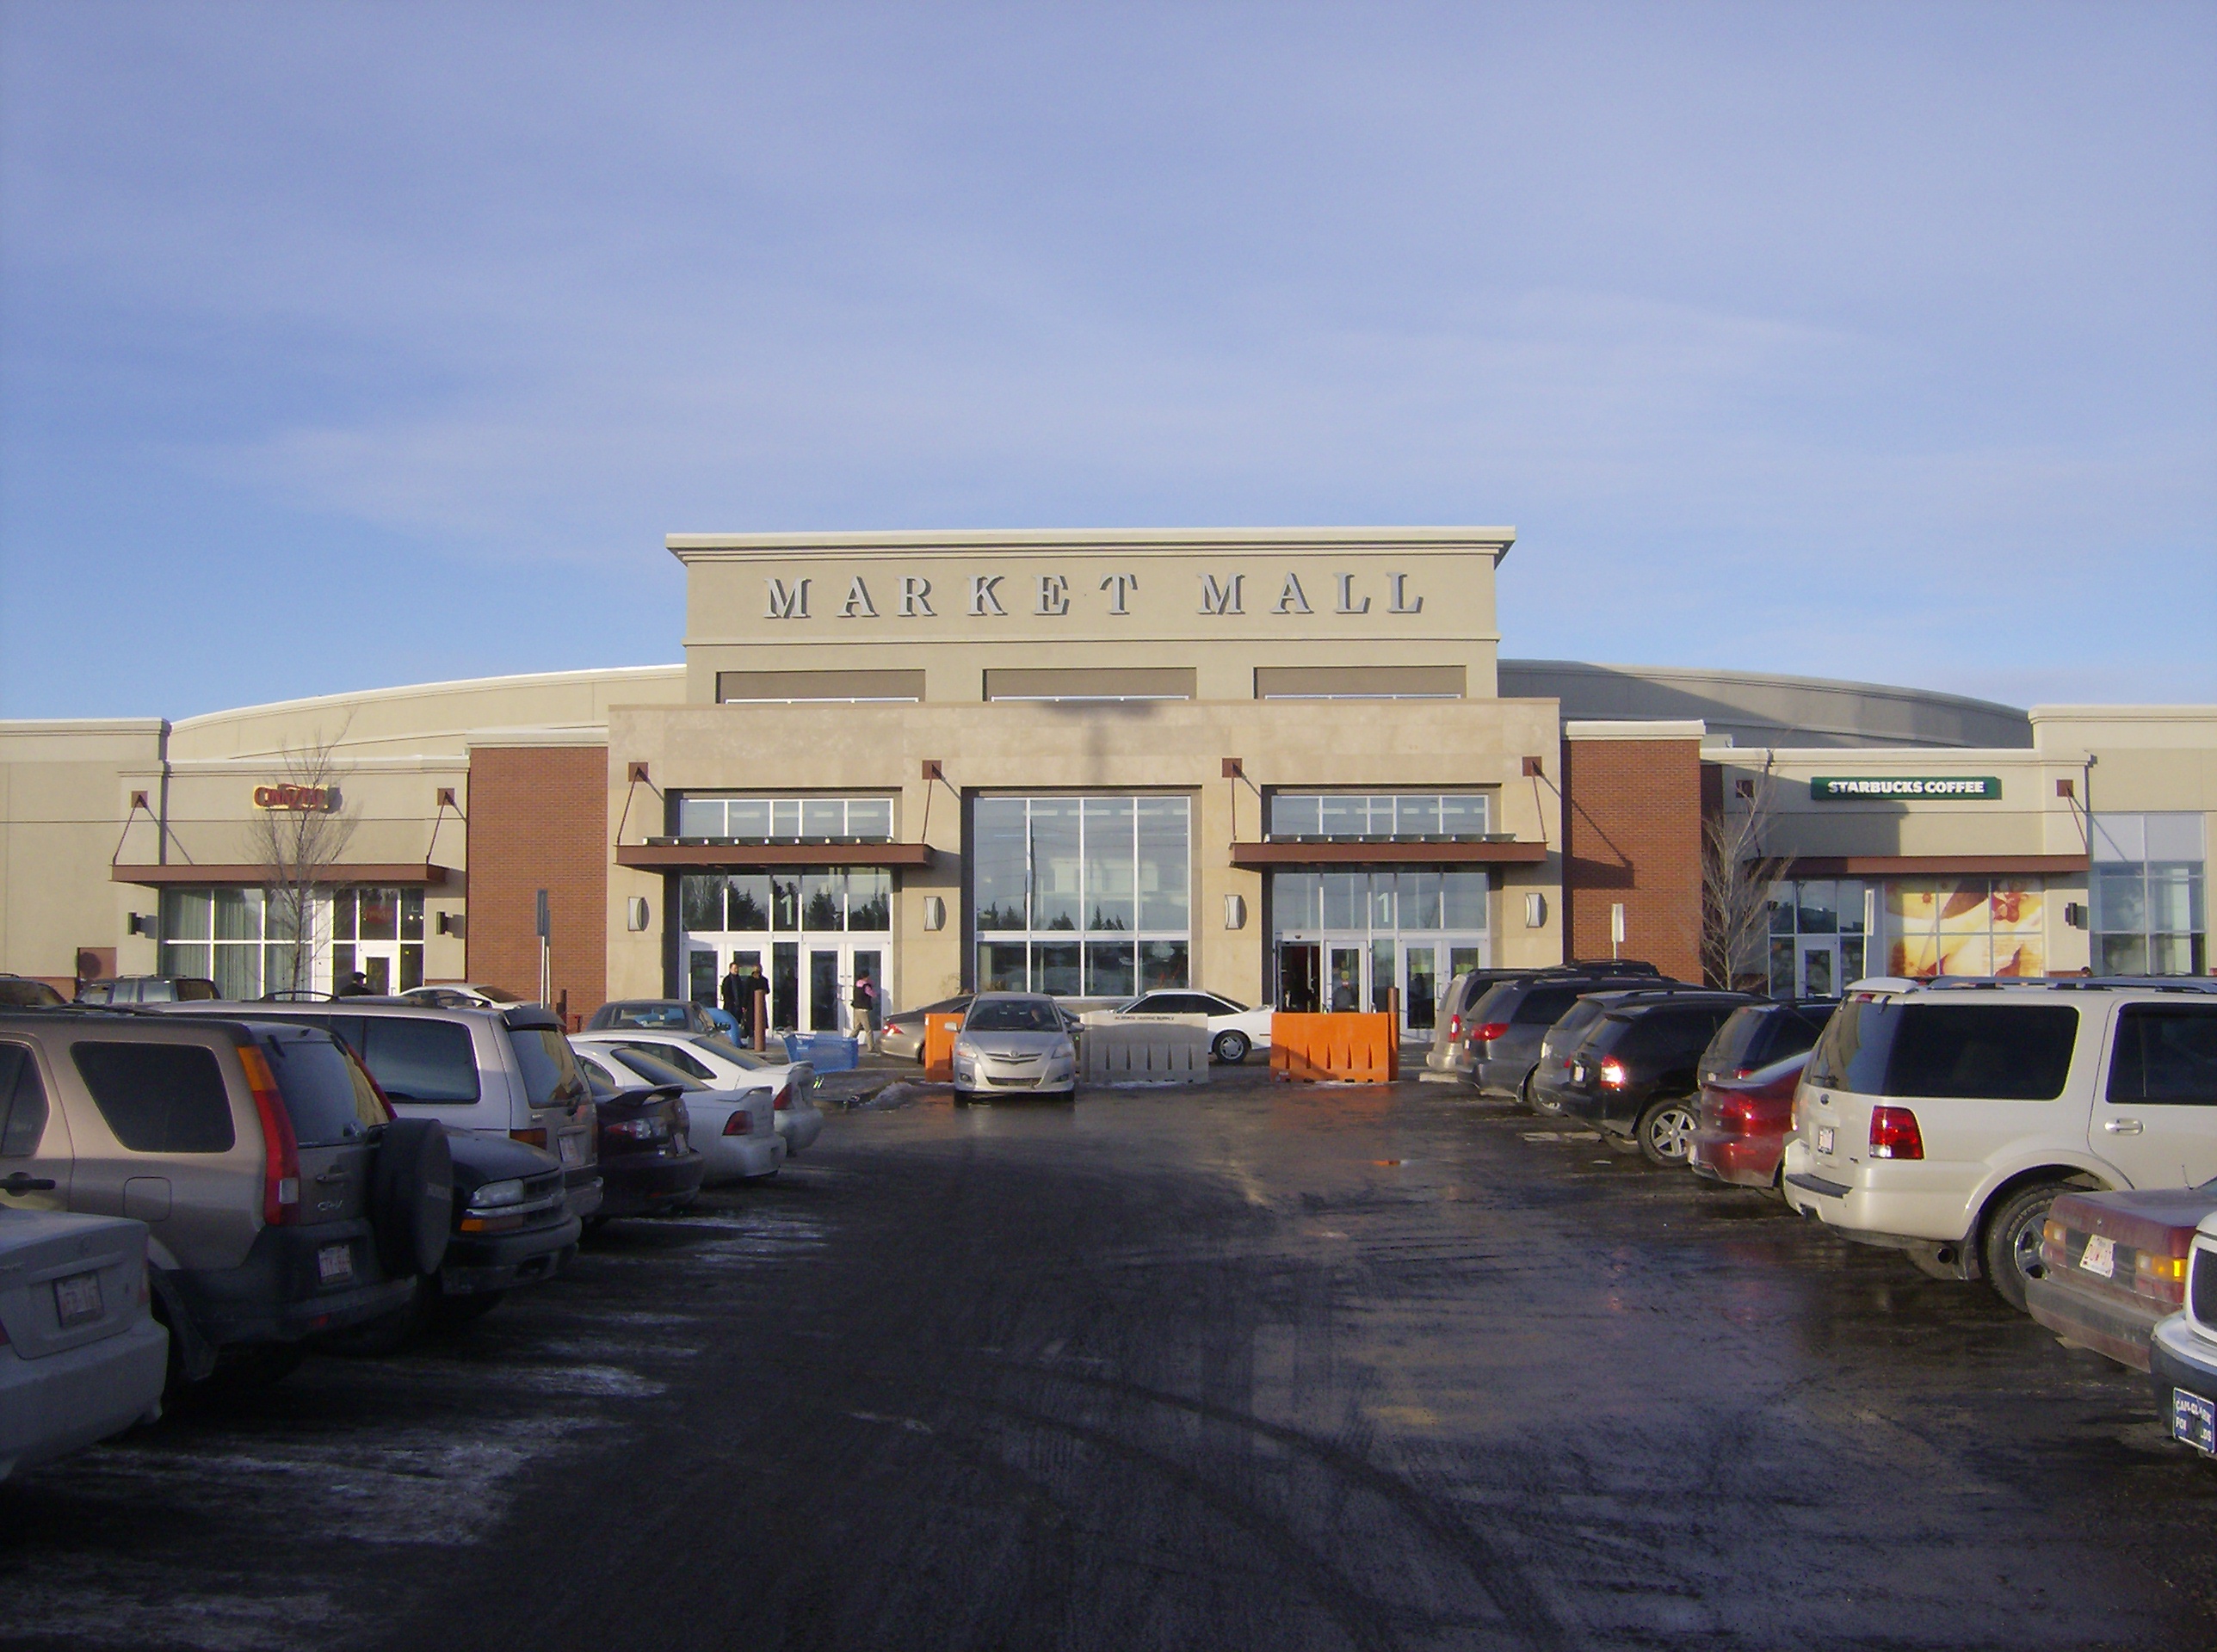 CF Market Mall